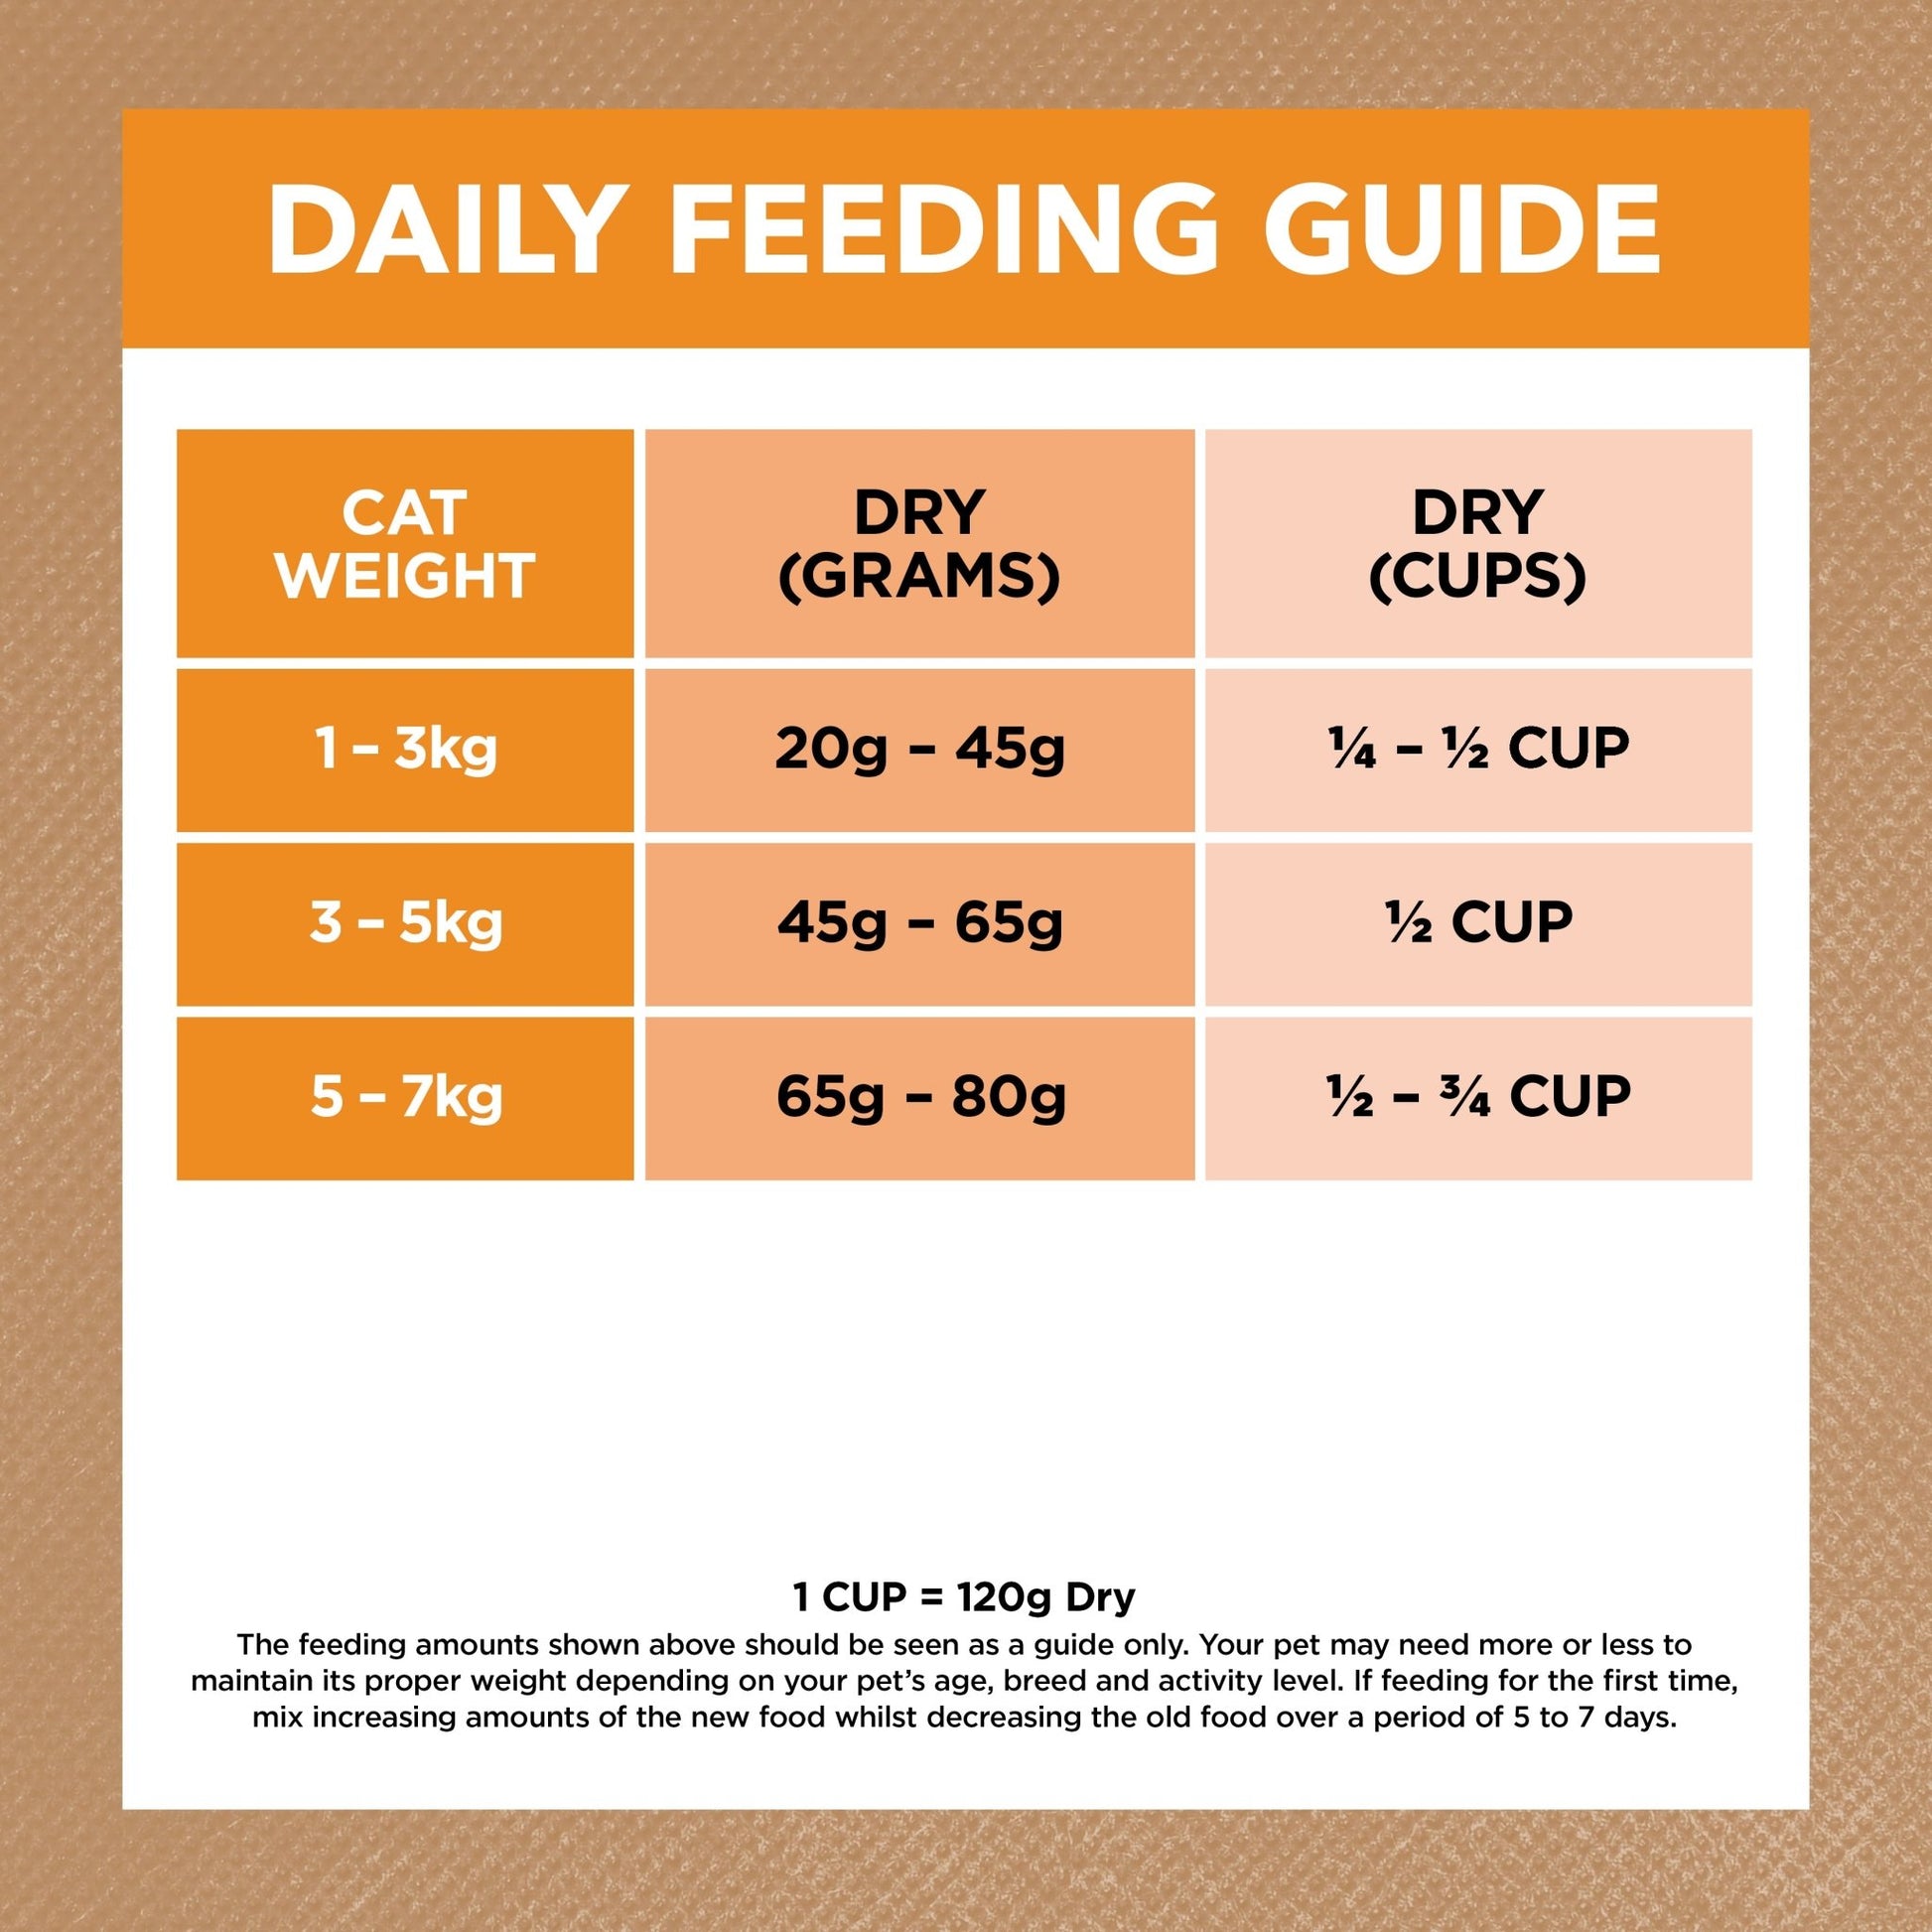 Ivory Coat Grain Free Dry Cat Food Adult Chicken - Woonona Petfood & Produce